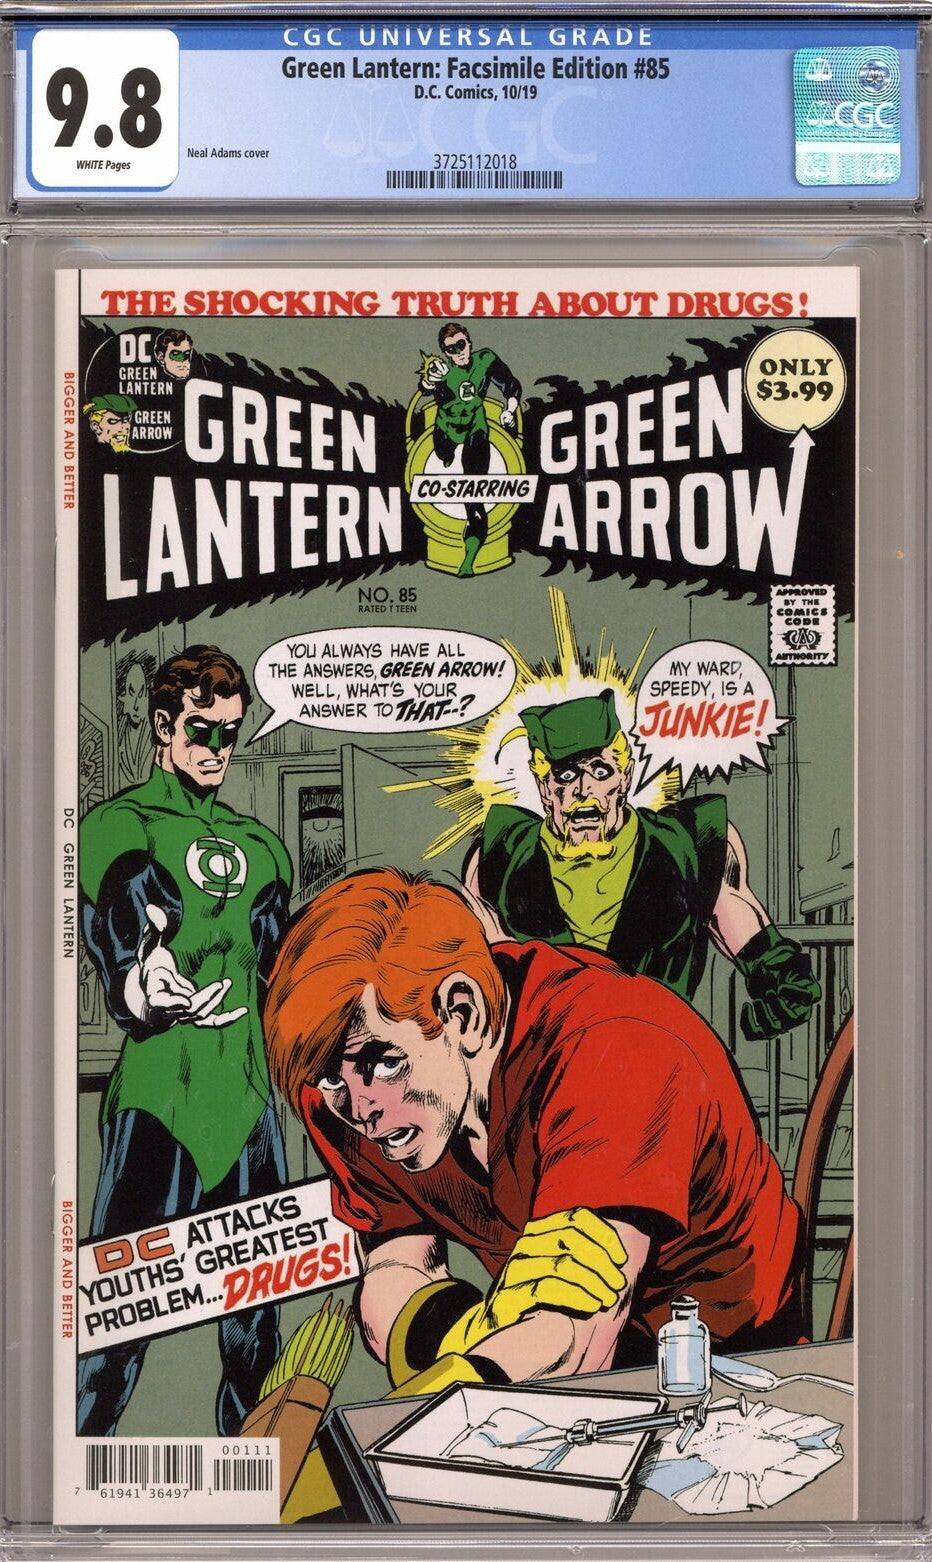 Green Lantern Green Arrow #85 Facsimile Edition CGC 9.8 - Neal Adams DC drug issue